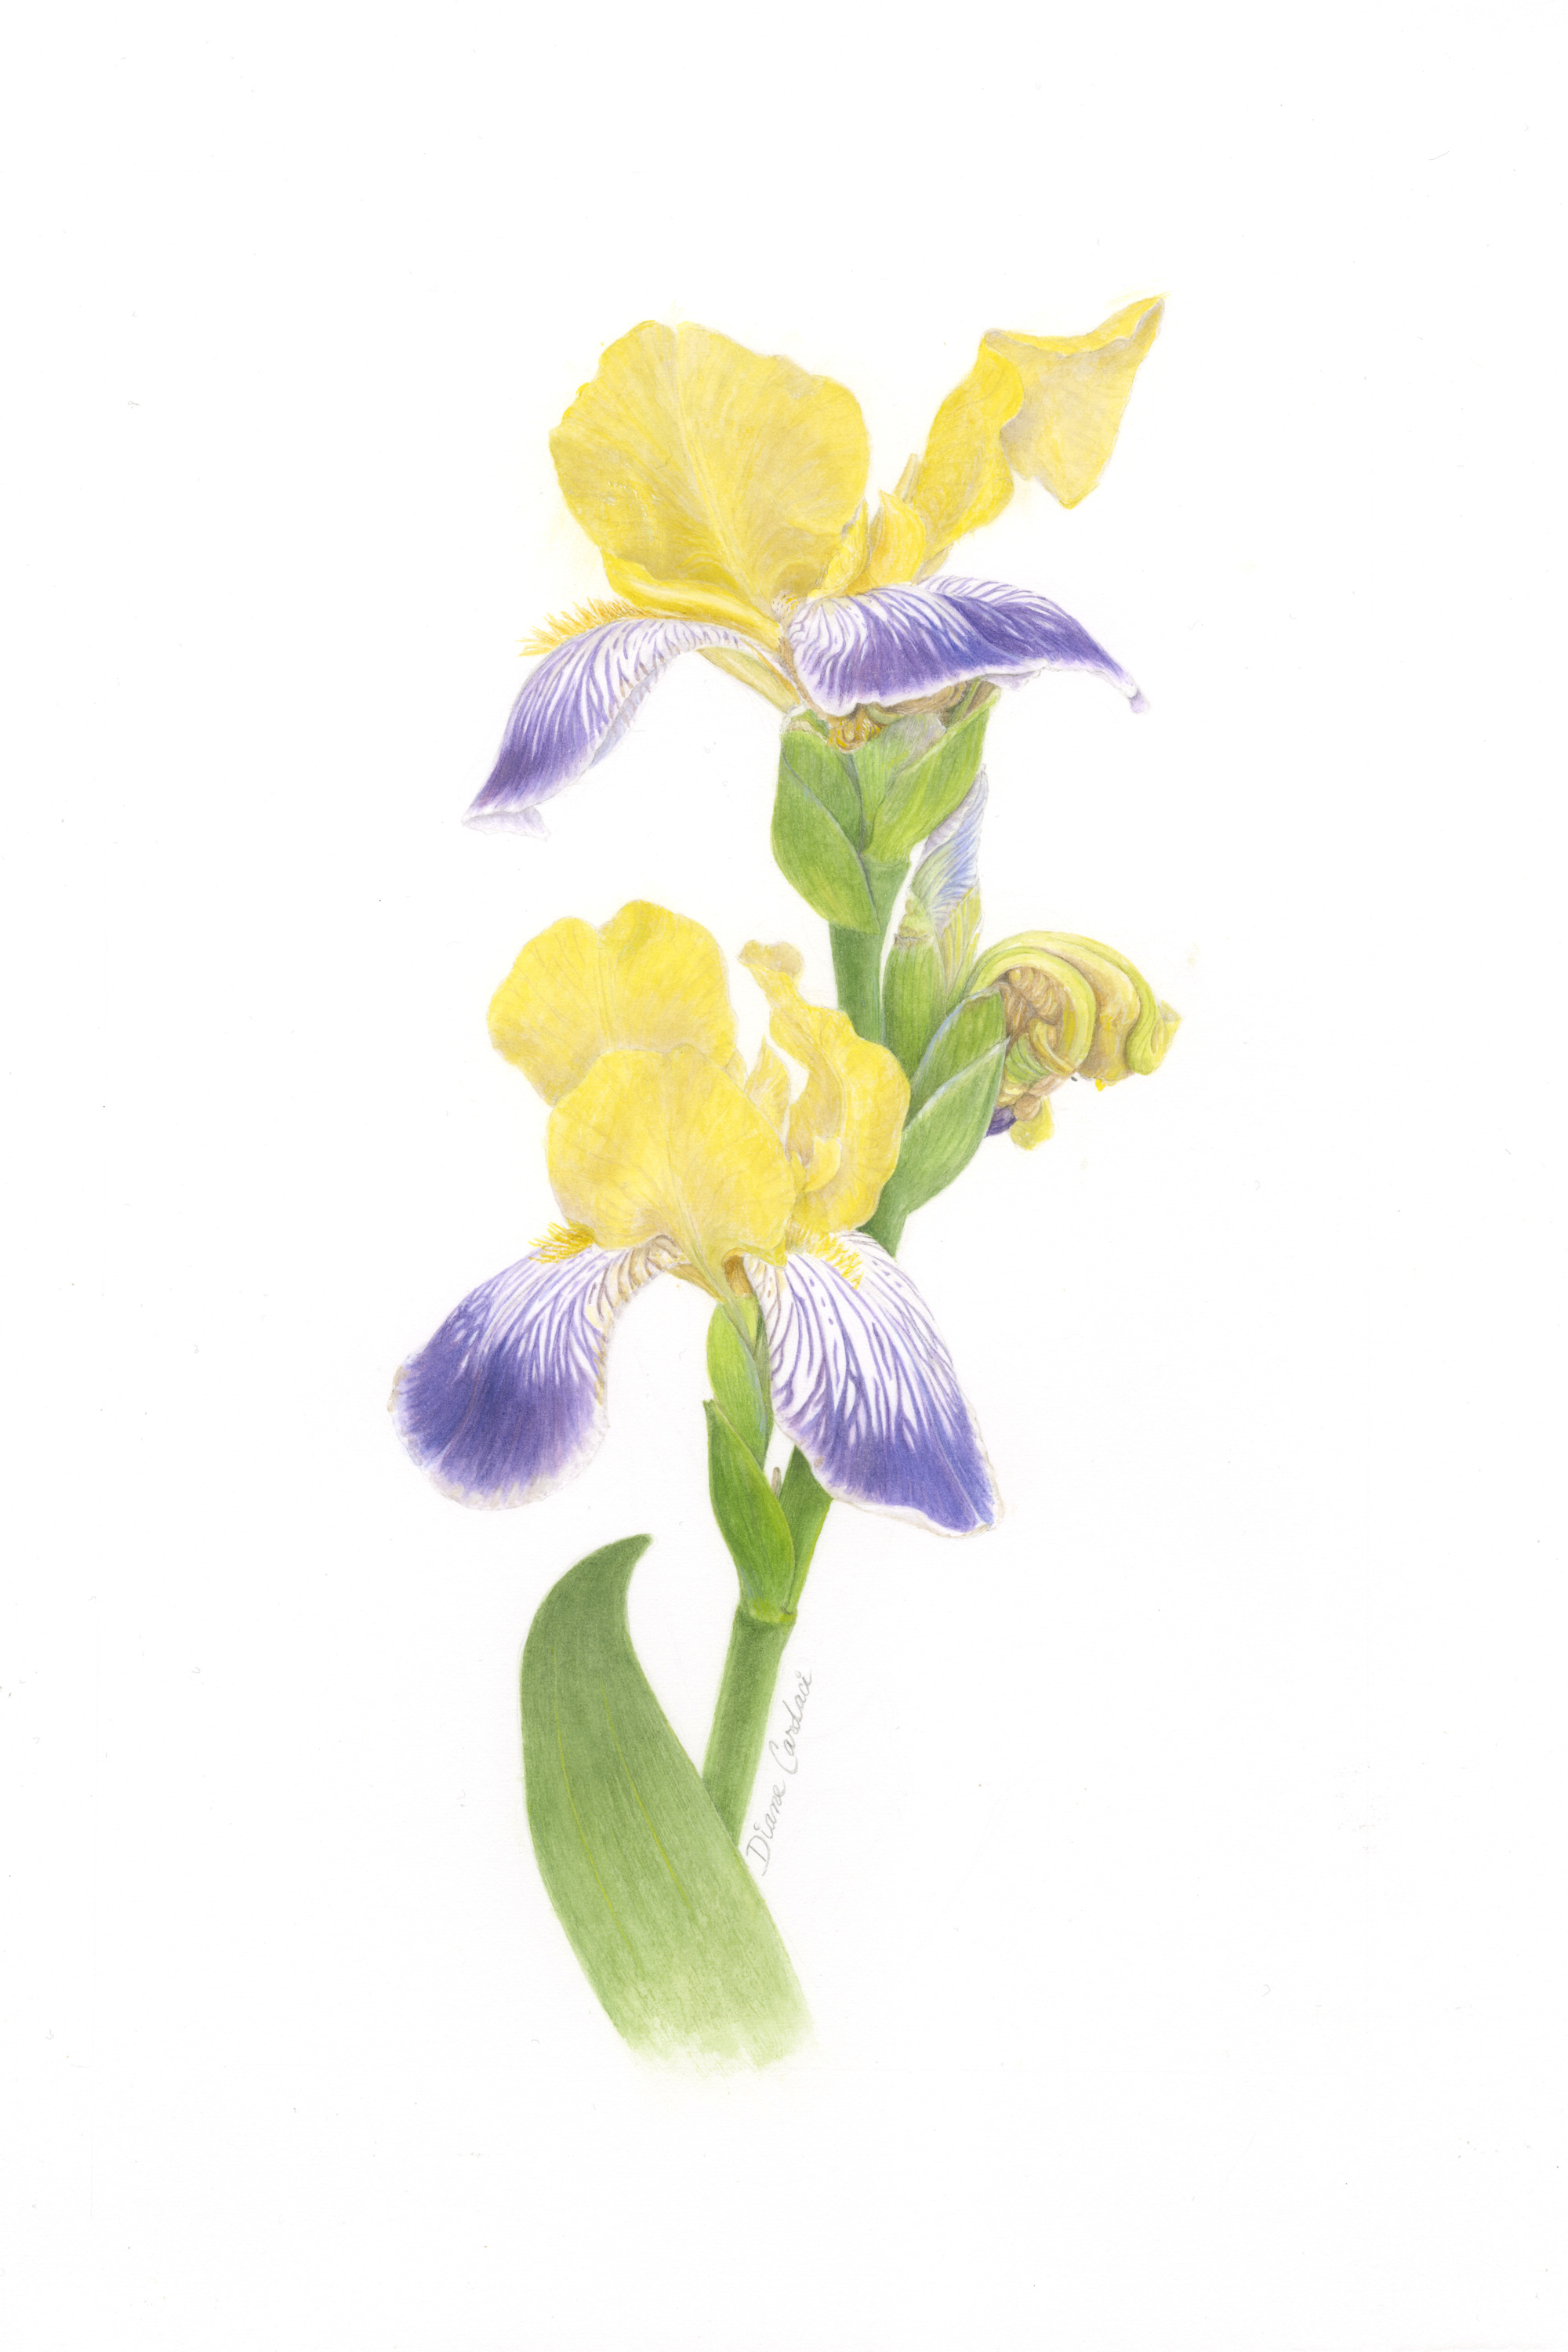 Hungarian iris ufp1mt